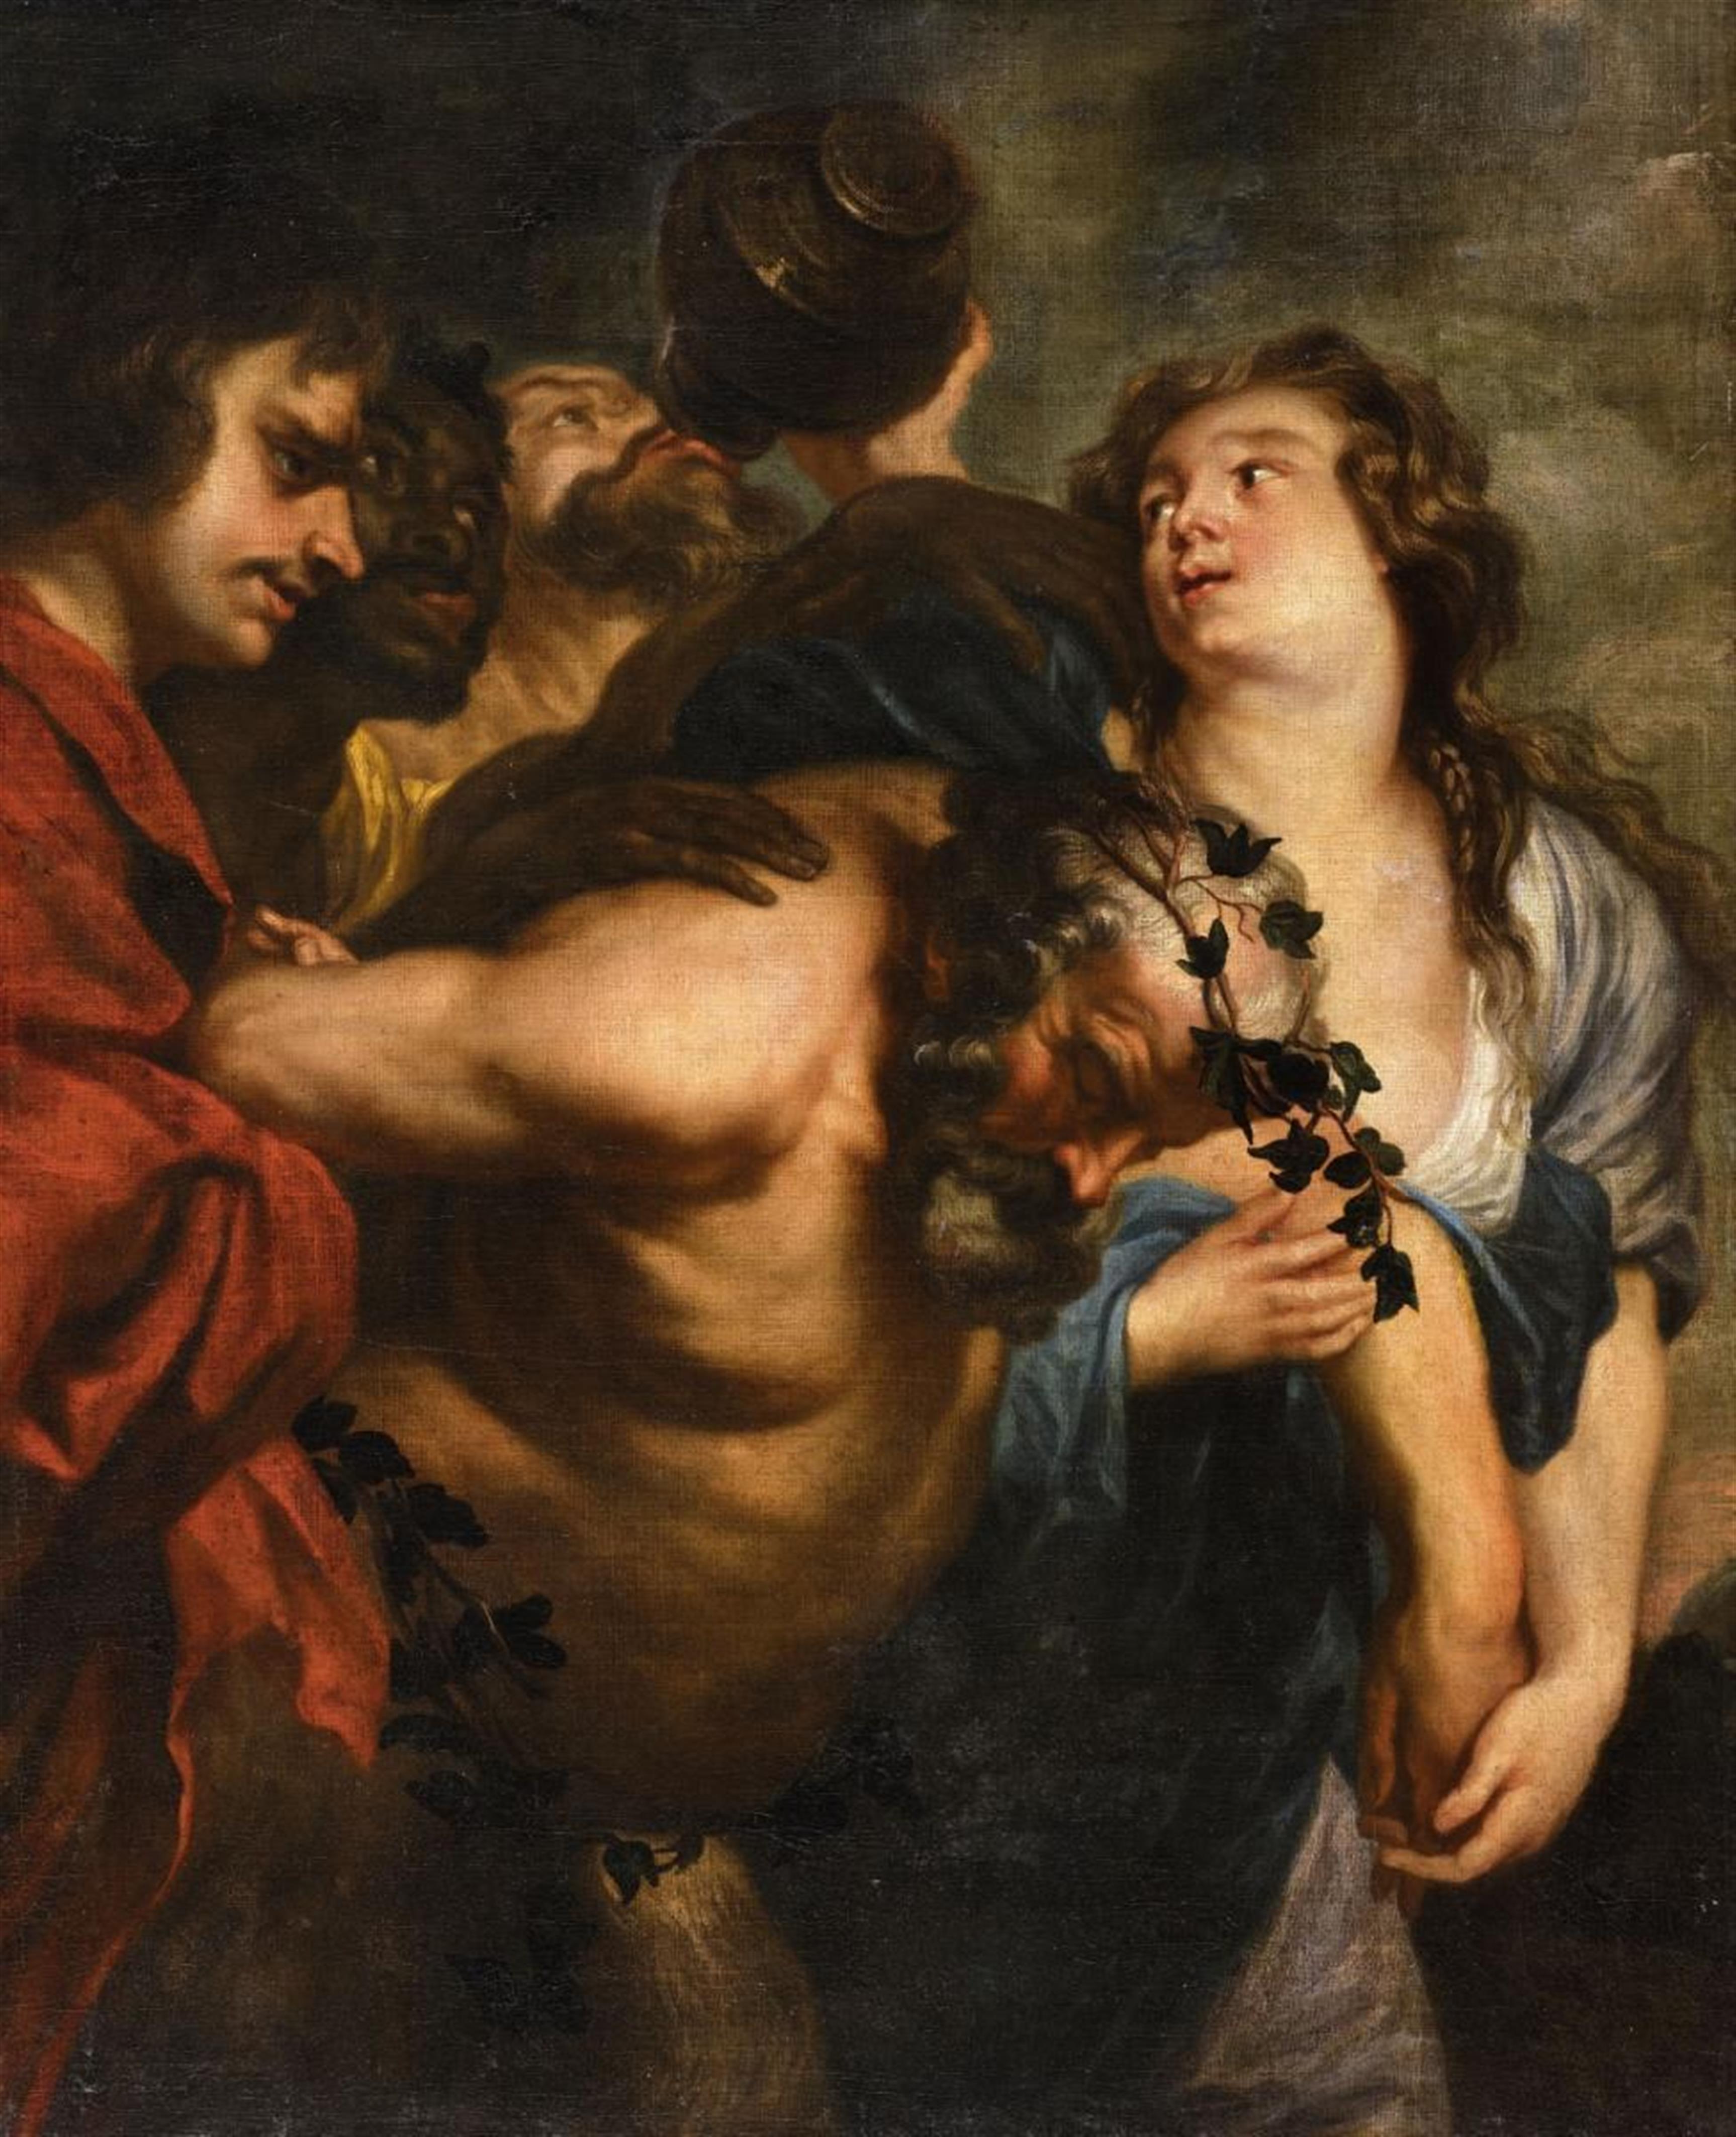 Flämischer Meister nach A. van Dyck - Der trunkene Silen - image-1